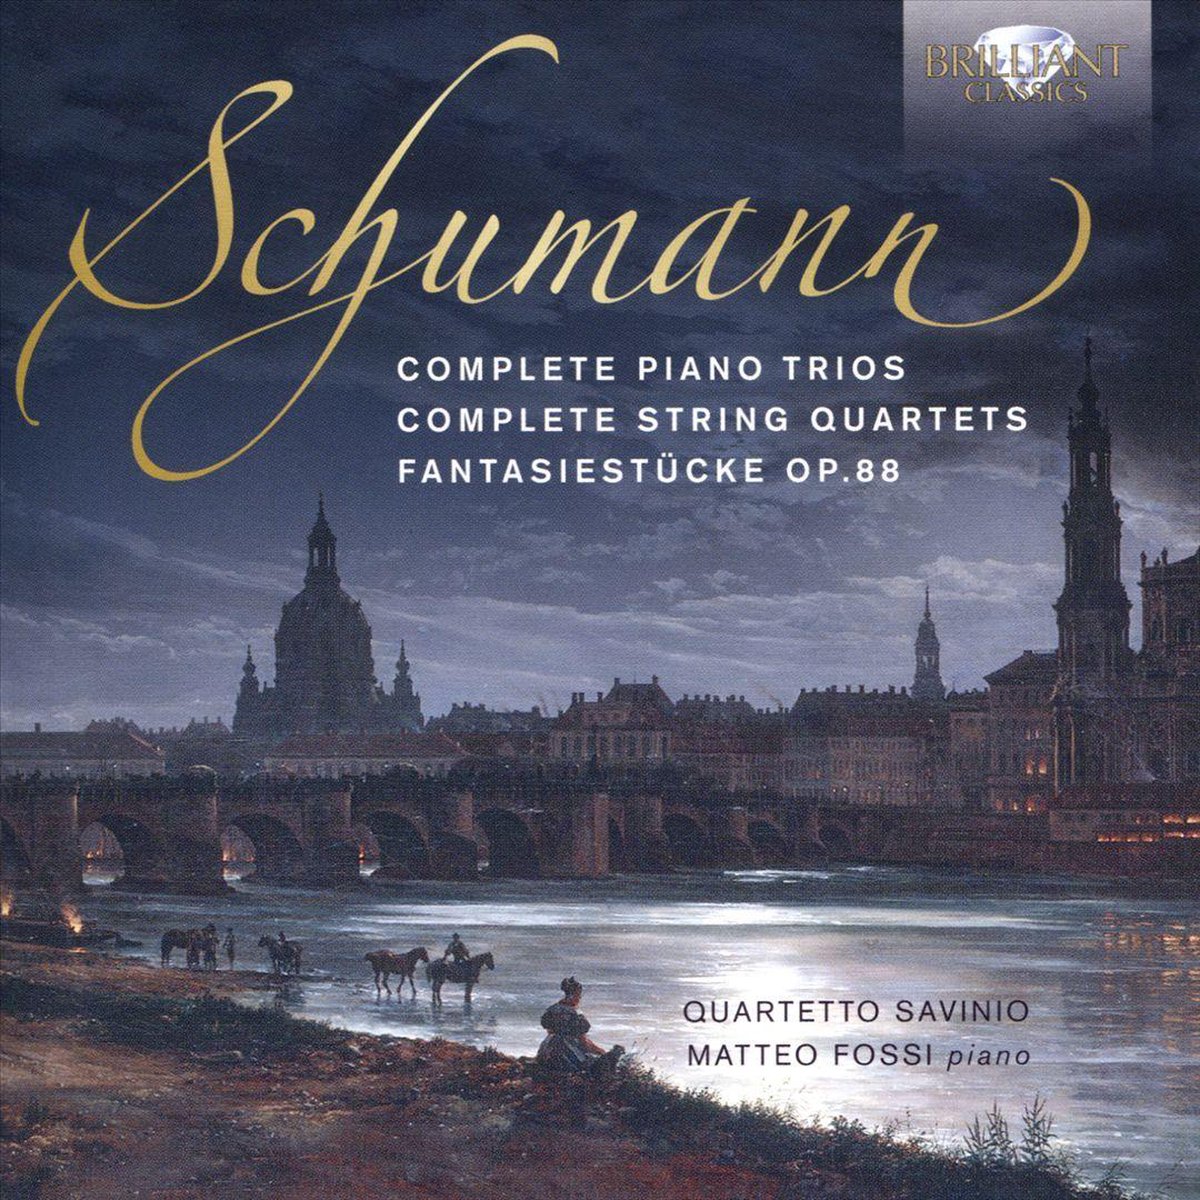 Schumann: Complete Piano Trios. Complete String Quartets | Robert Schumann, Quartetto Savinio, Matteo Fossi